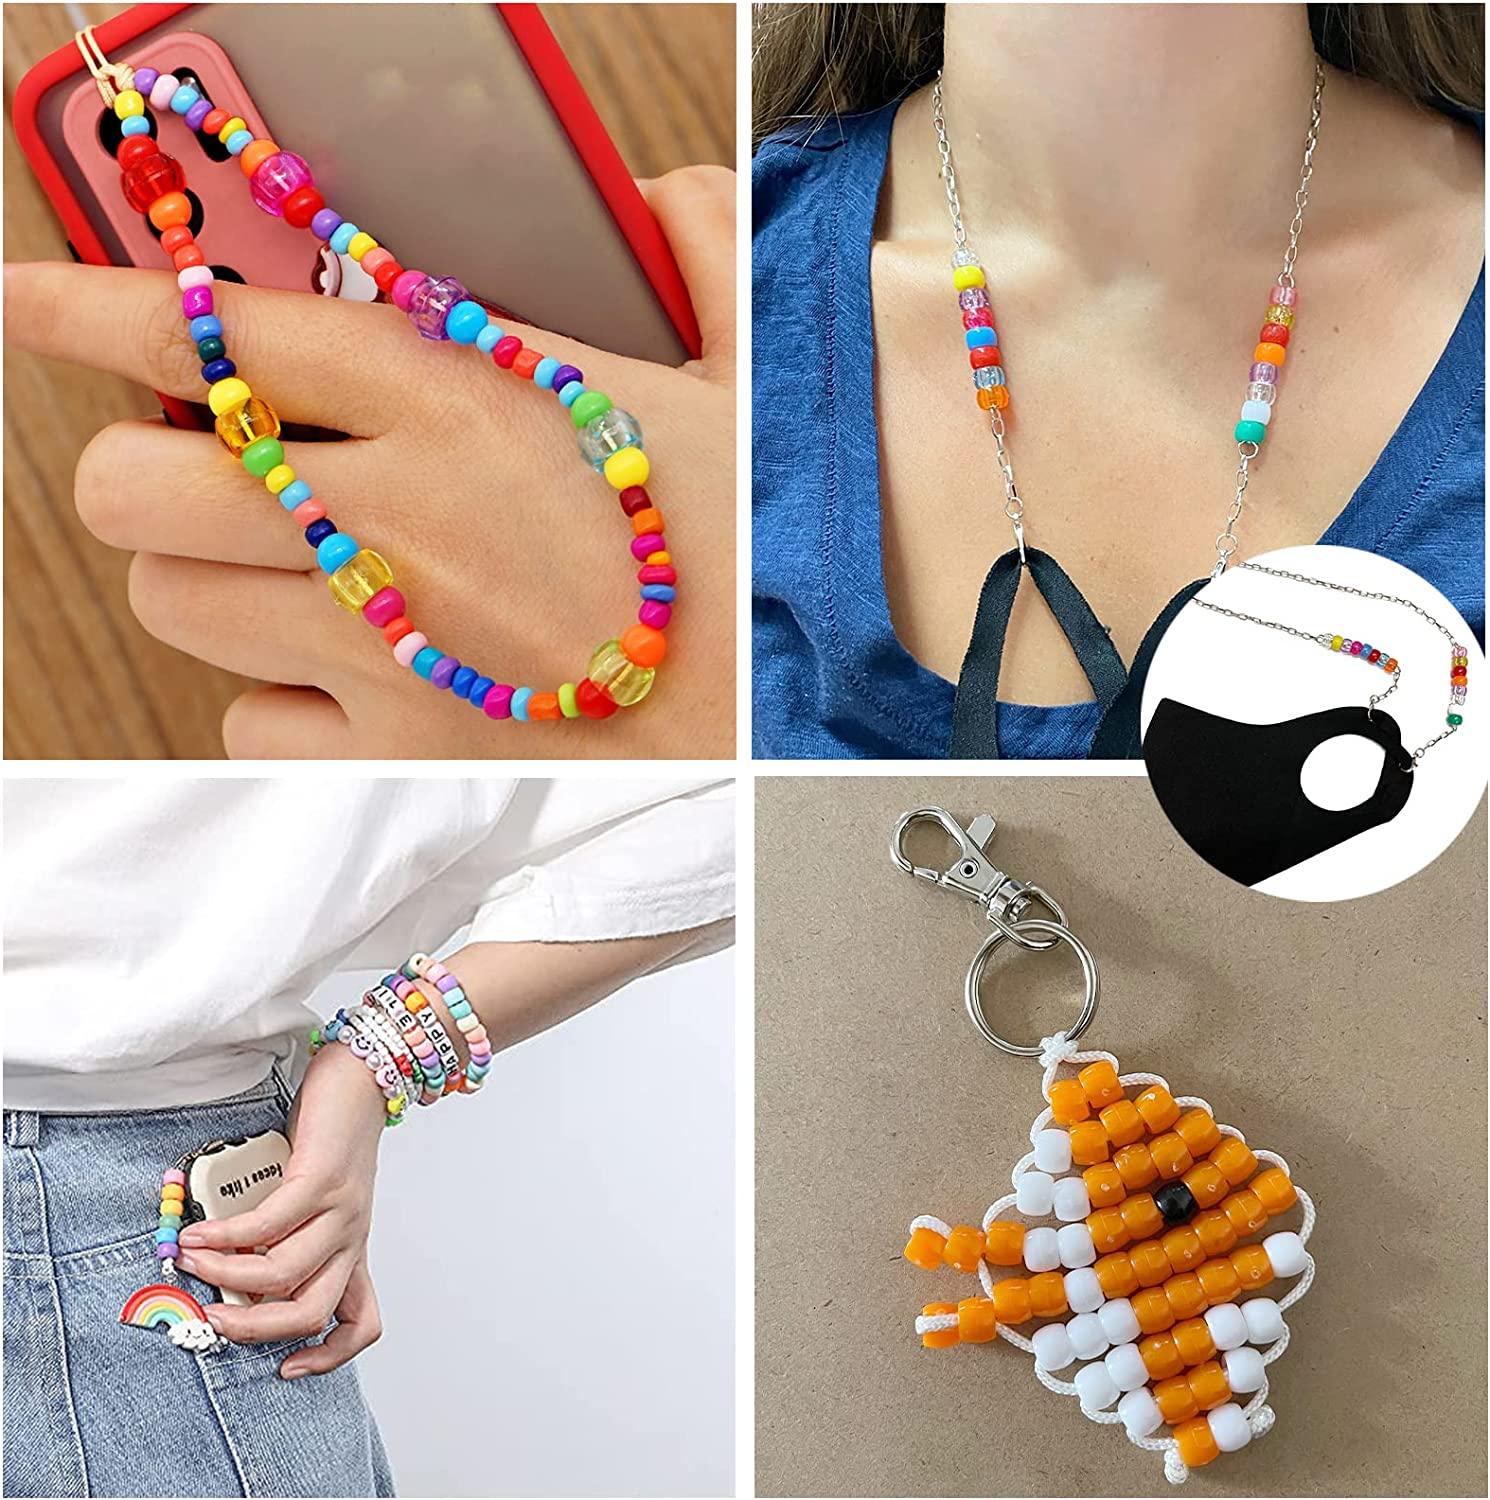 Simetufy 1200 Pcs Pony Beads Plastic Beads for Bracelet Making